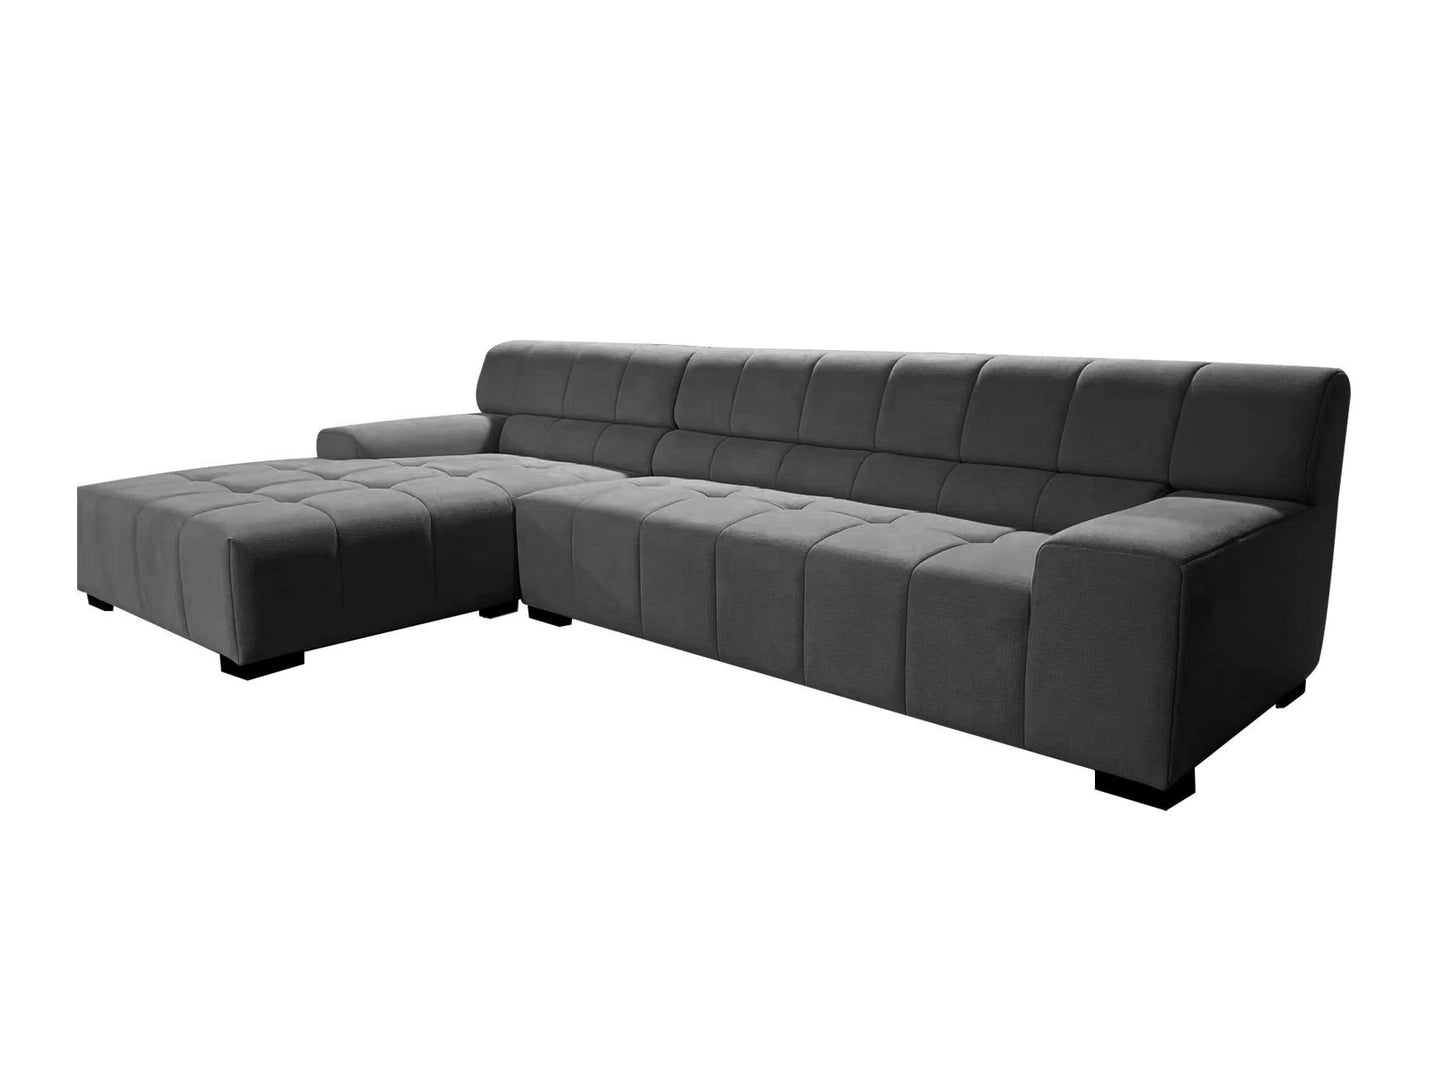 Enfes, Luxury Dark Grey Sectional Sofa